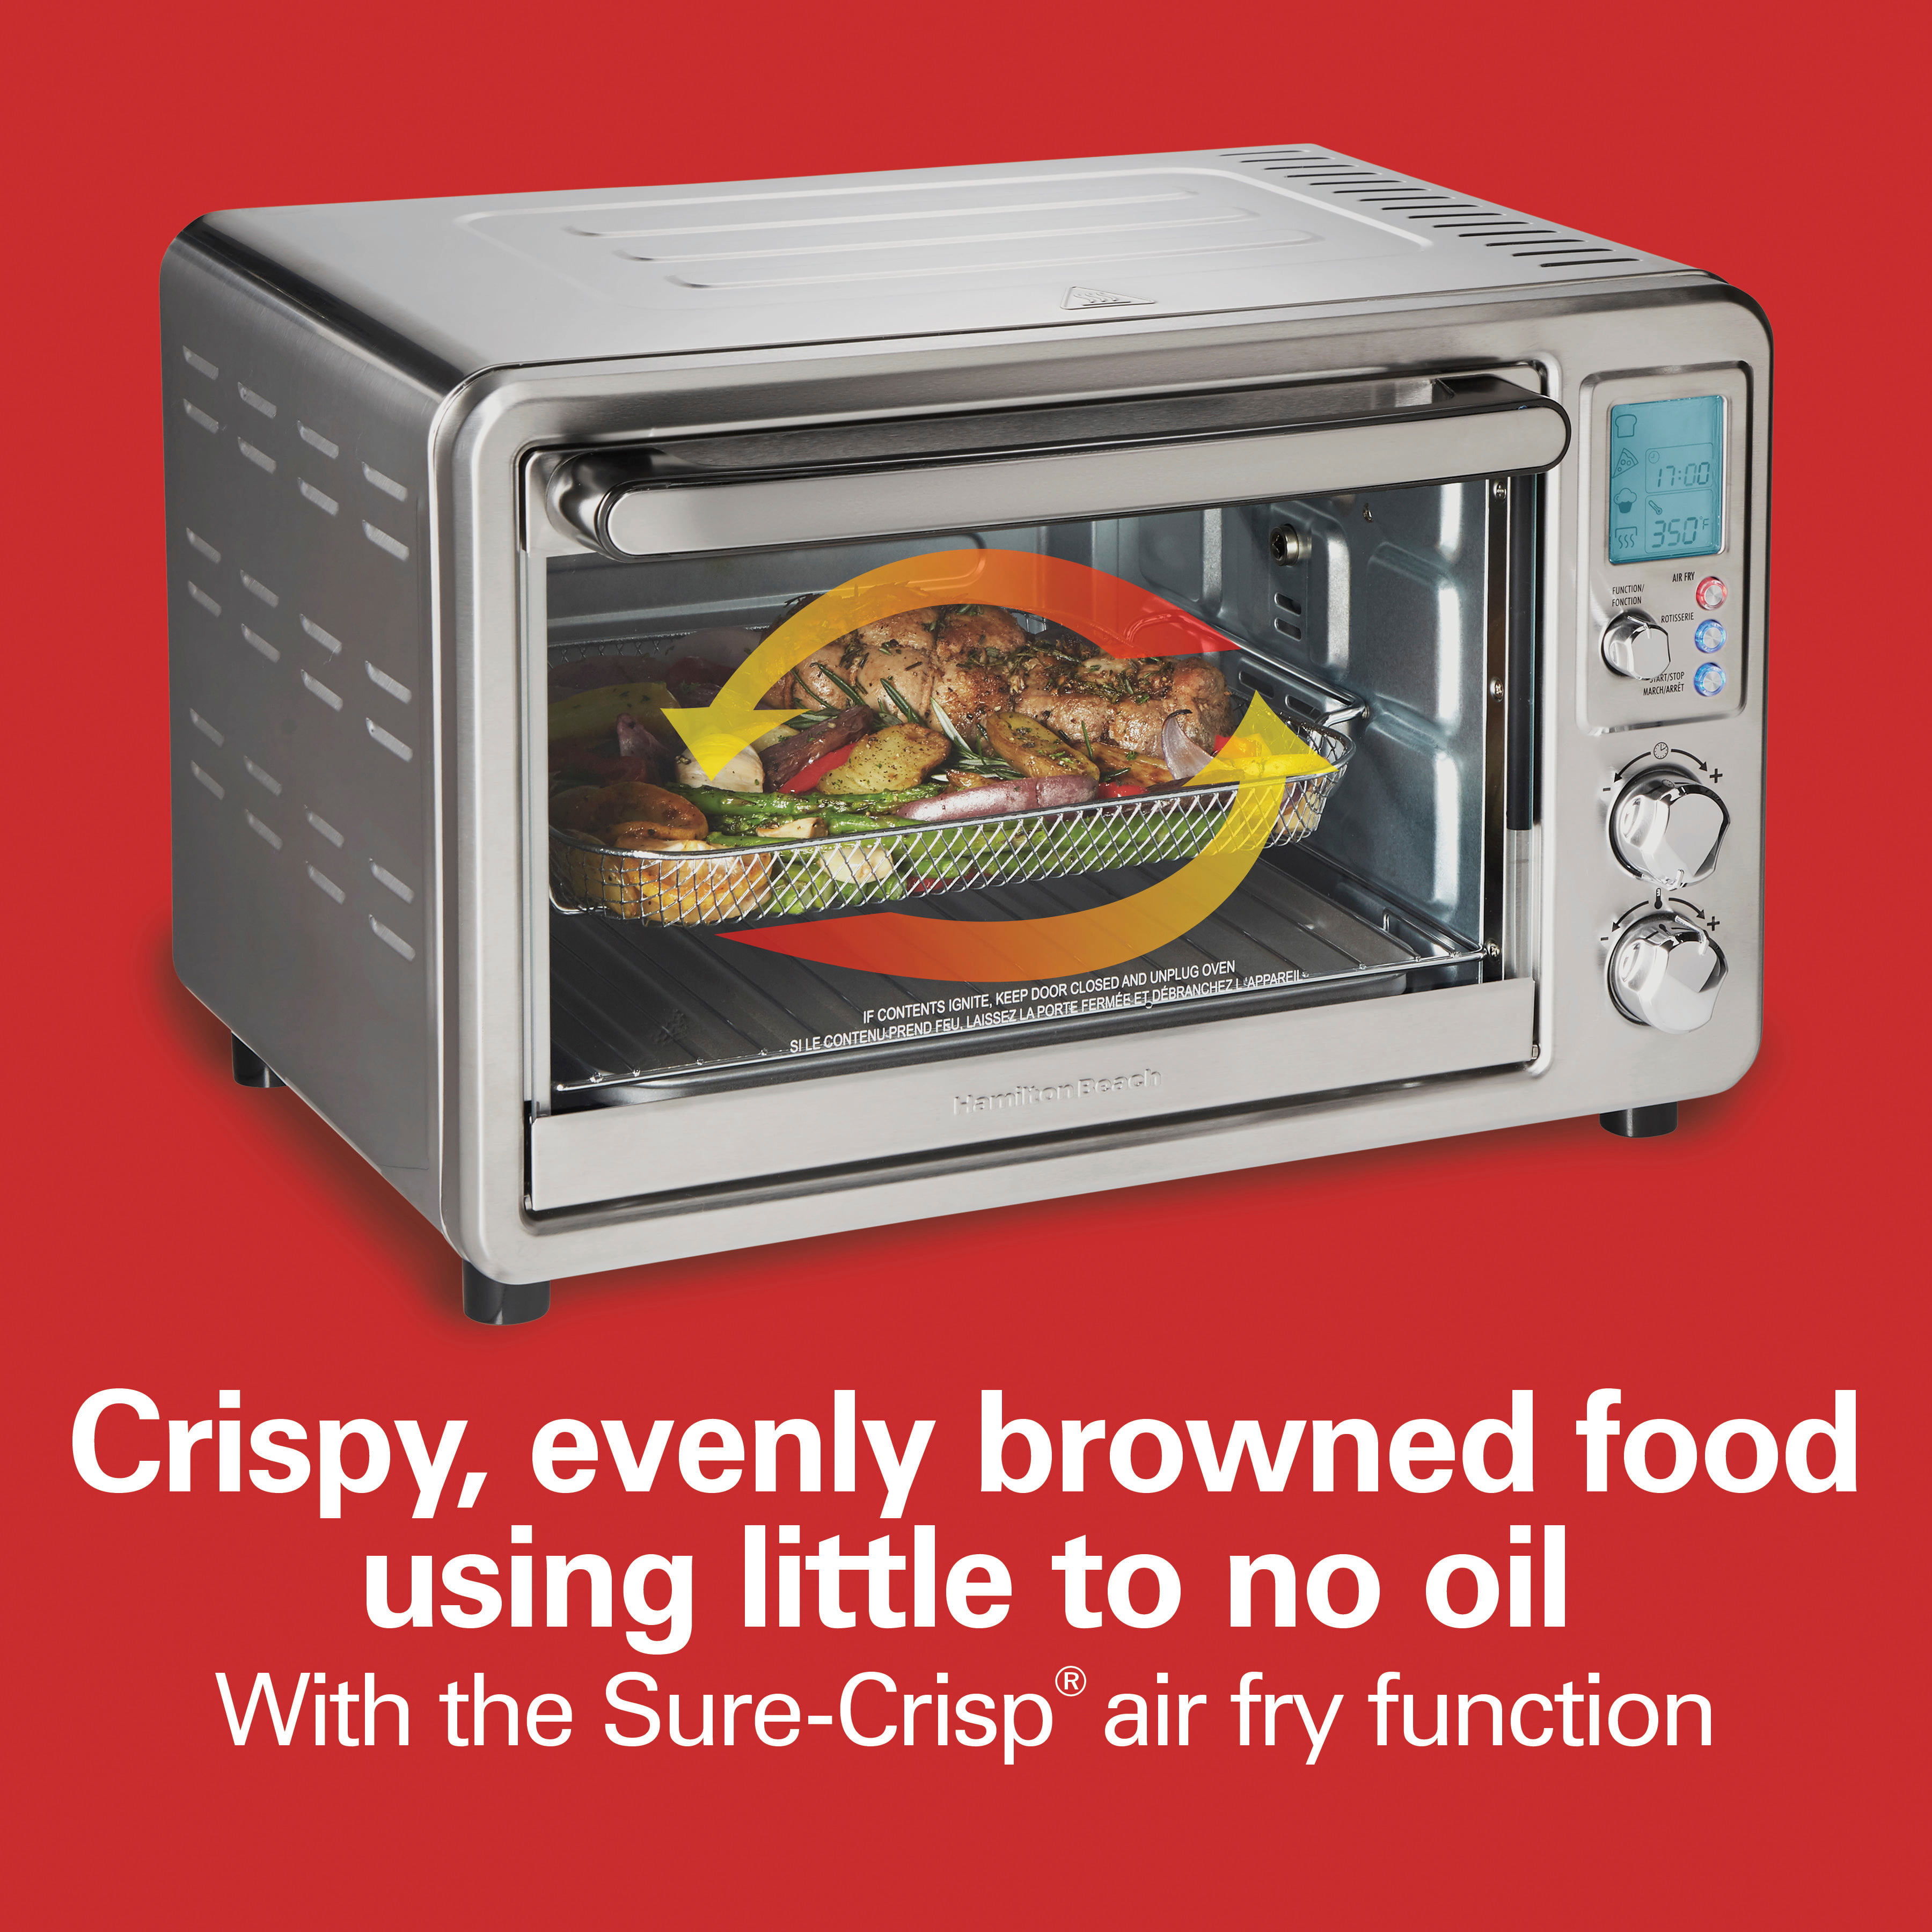 Hamilton Beach Hamilton Beach® Professional Sure-Crisp® Air Fry Digital Toaster  Oven - 31241